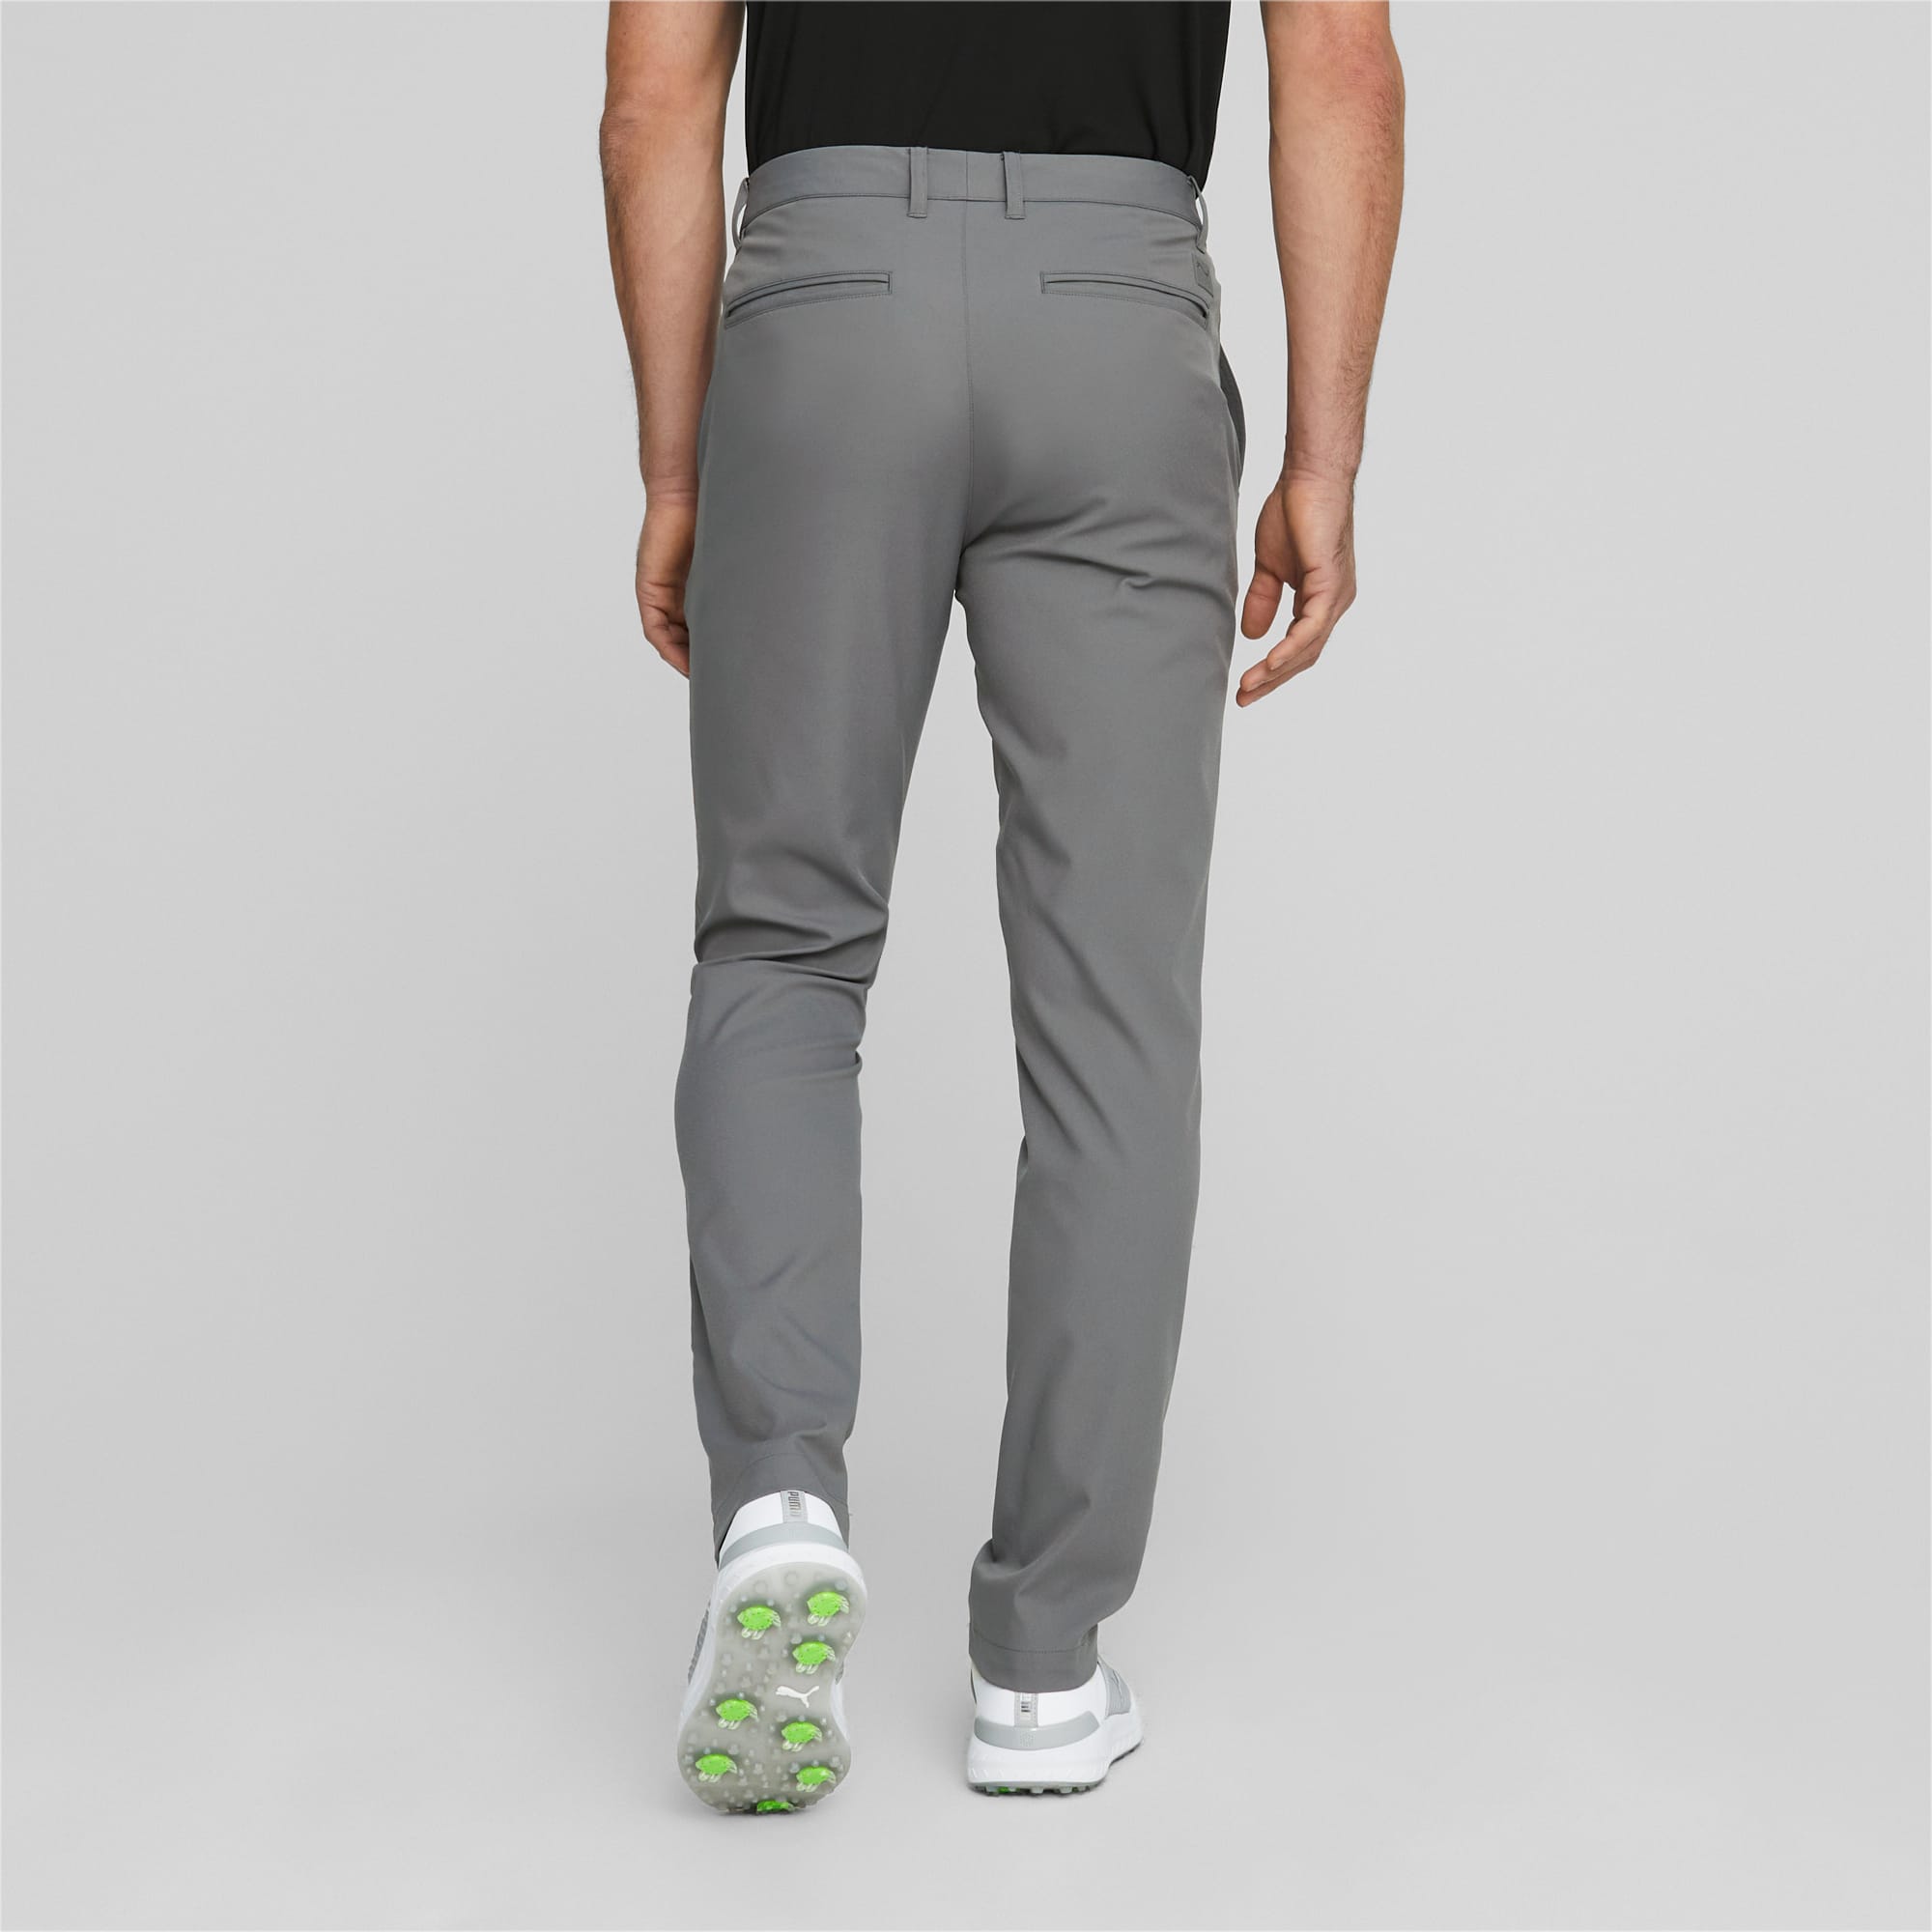 PUMA Dealer Tailored Golf Pants Men, Slate Sky, Size 38/36, Clothing